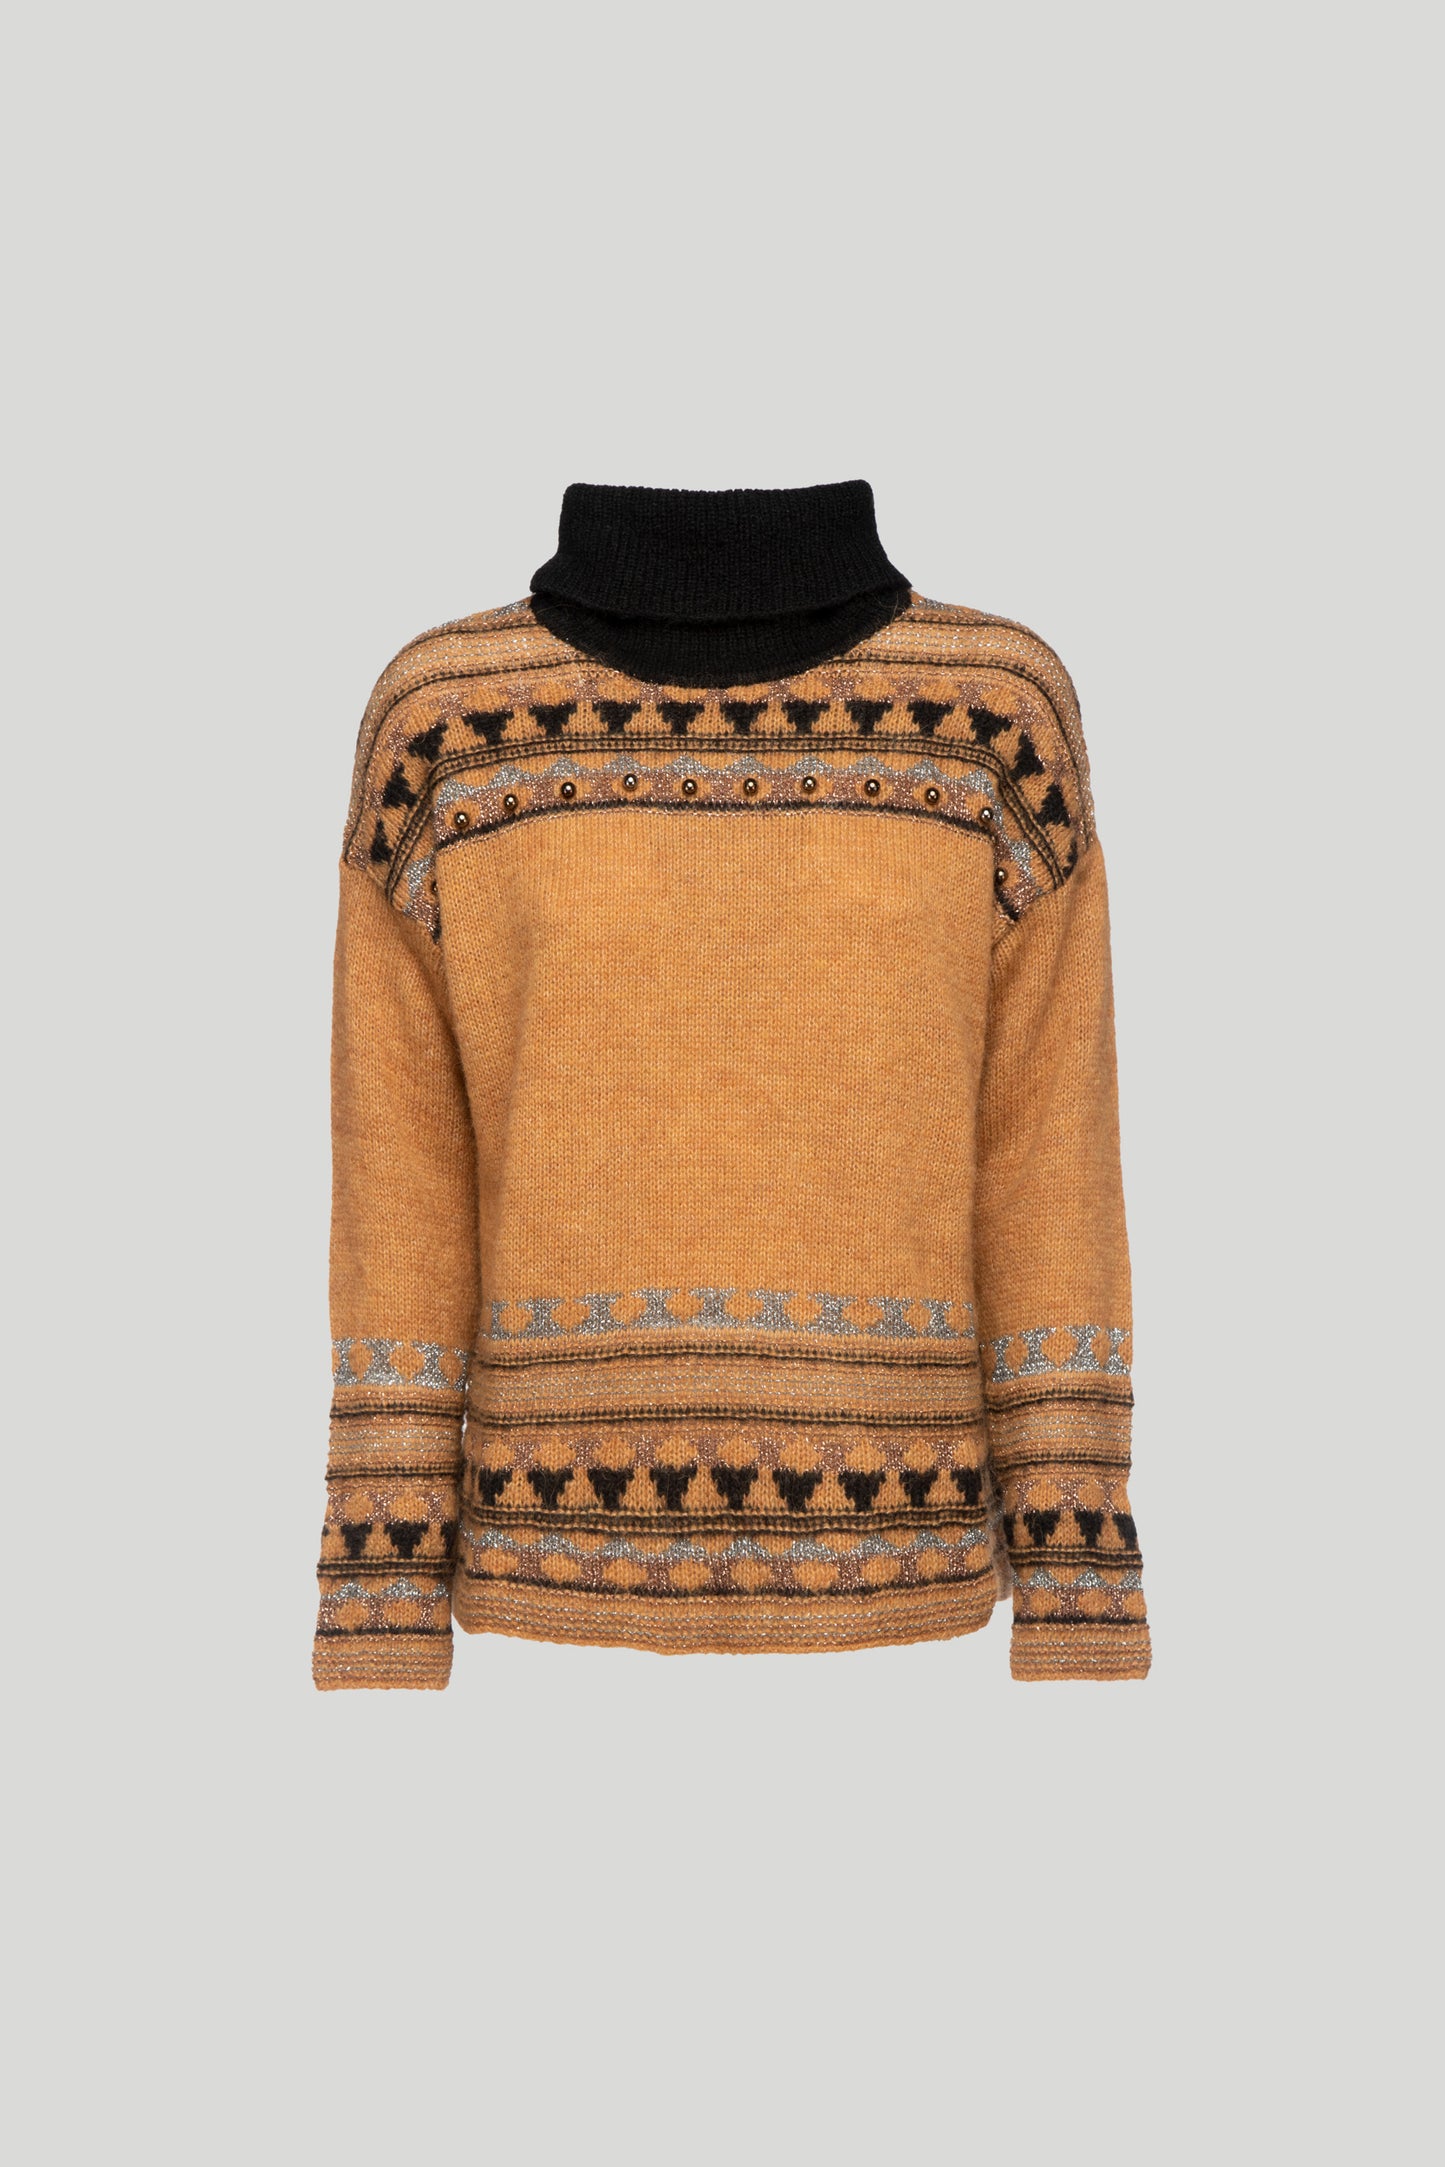 LIU JO Camel sweater